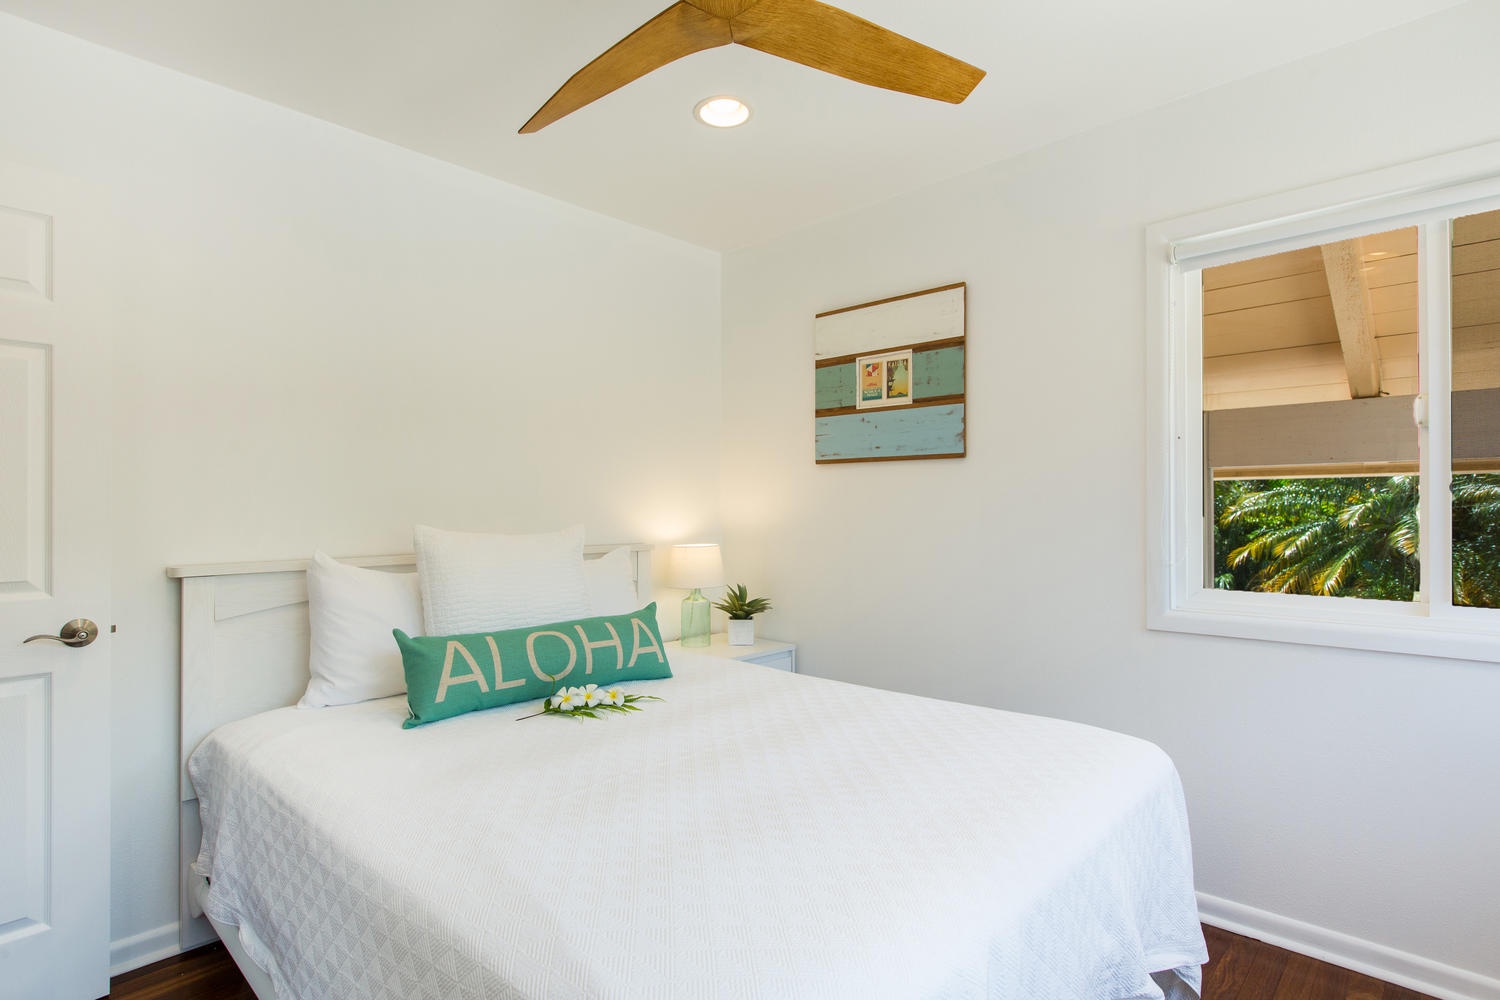 Honolulu Vacation Rentals, Makani Lani - Bedroom 3, Queen bed with nice, clean aloha design.